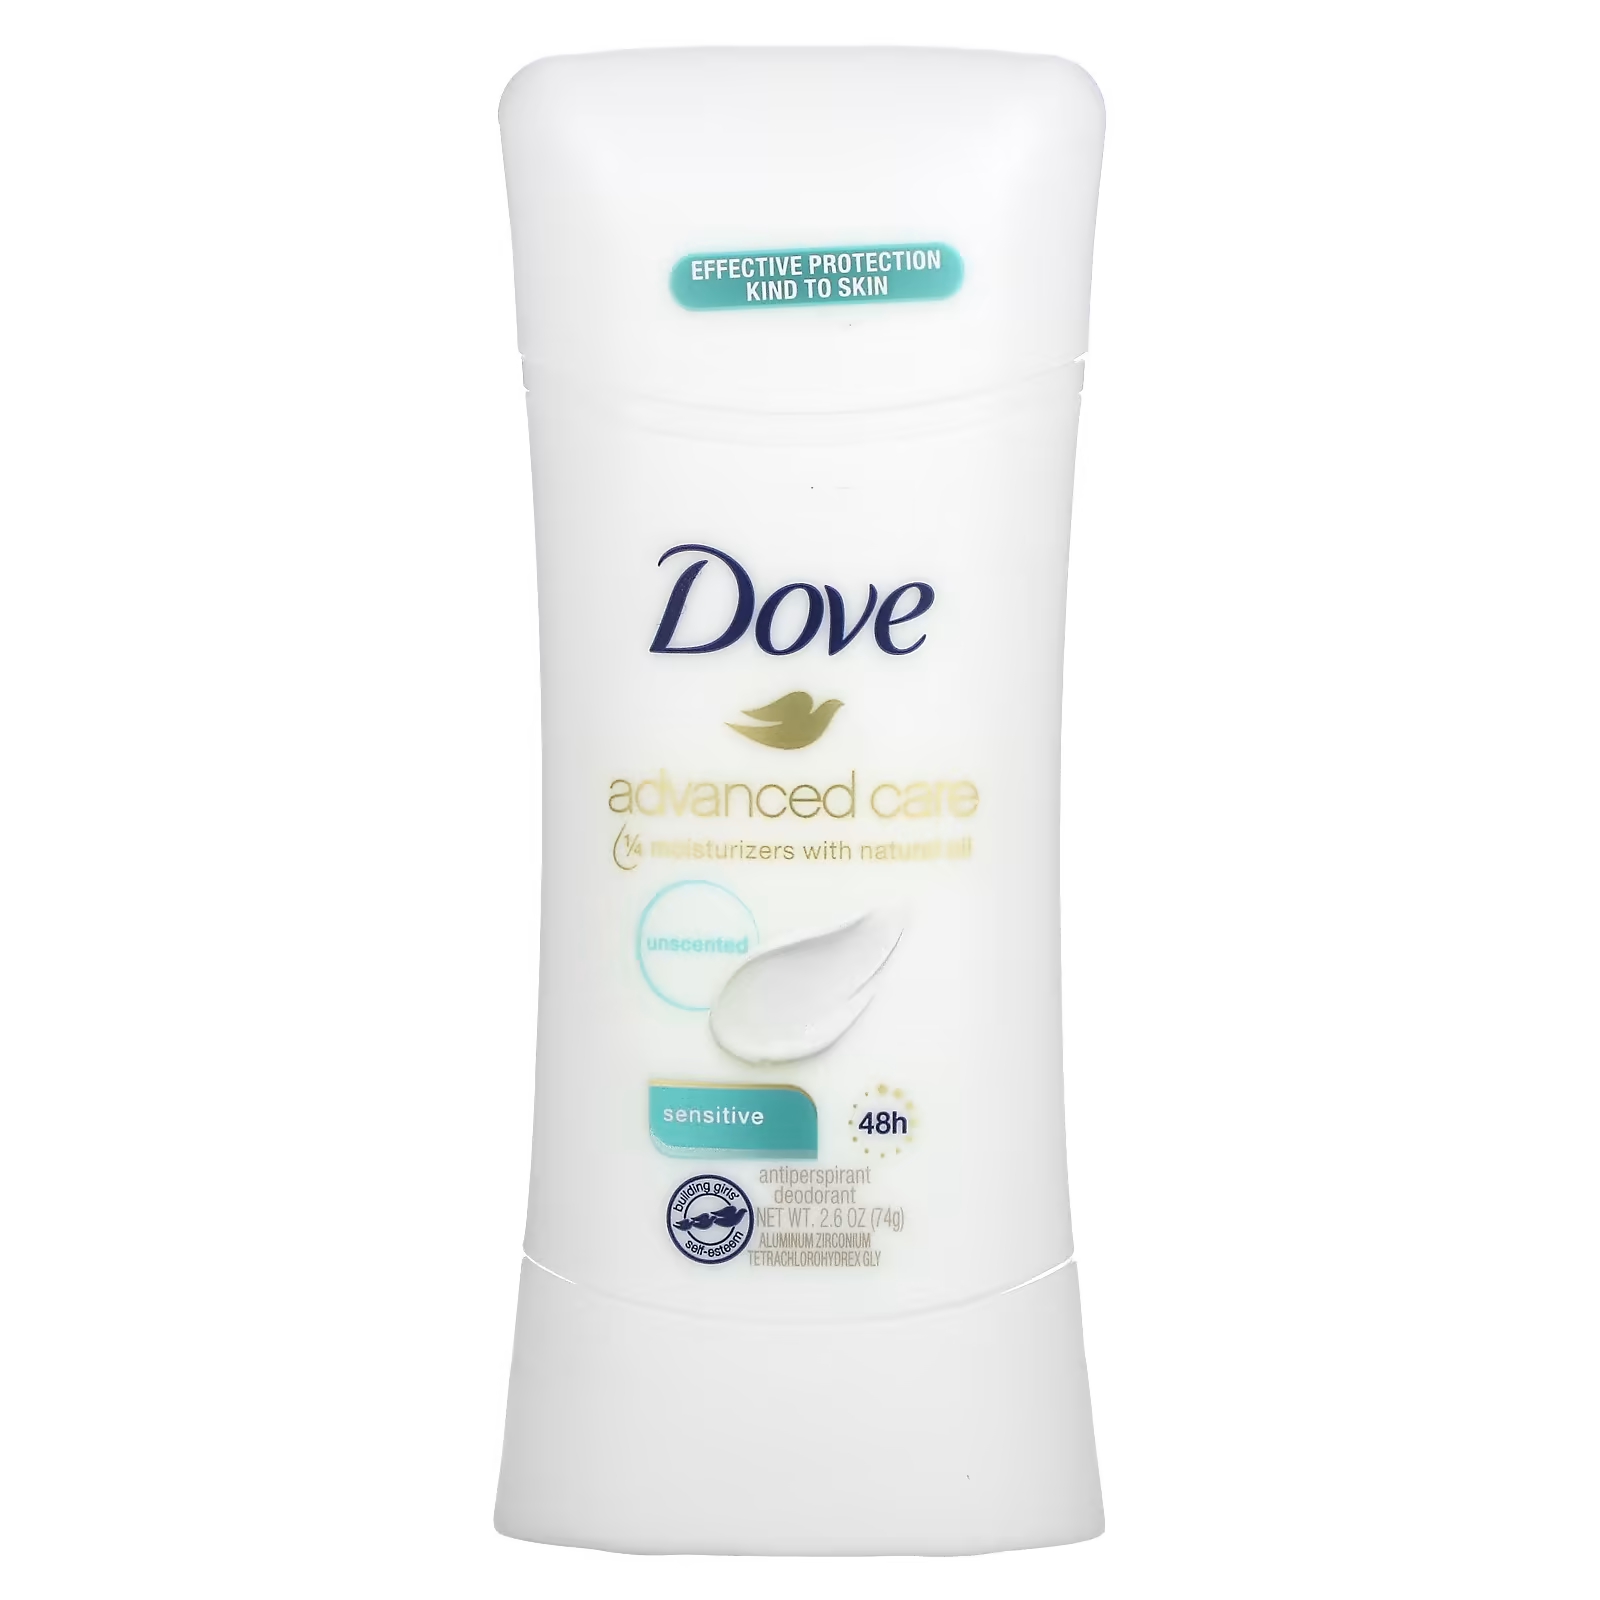 Дезодорант-антиперспирант Dove Advanced Care dove advanced care дезодорант антиперспирант финиш 74 г 2 6 унции